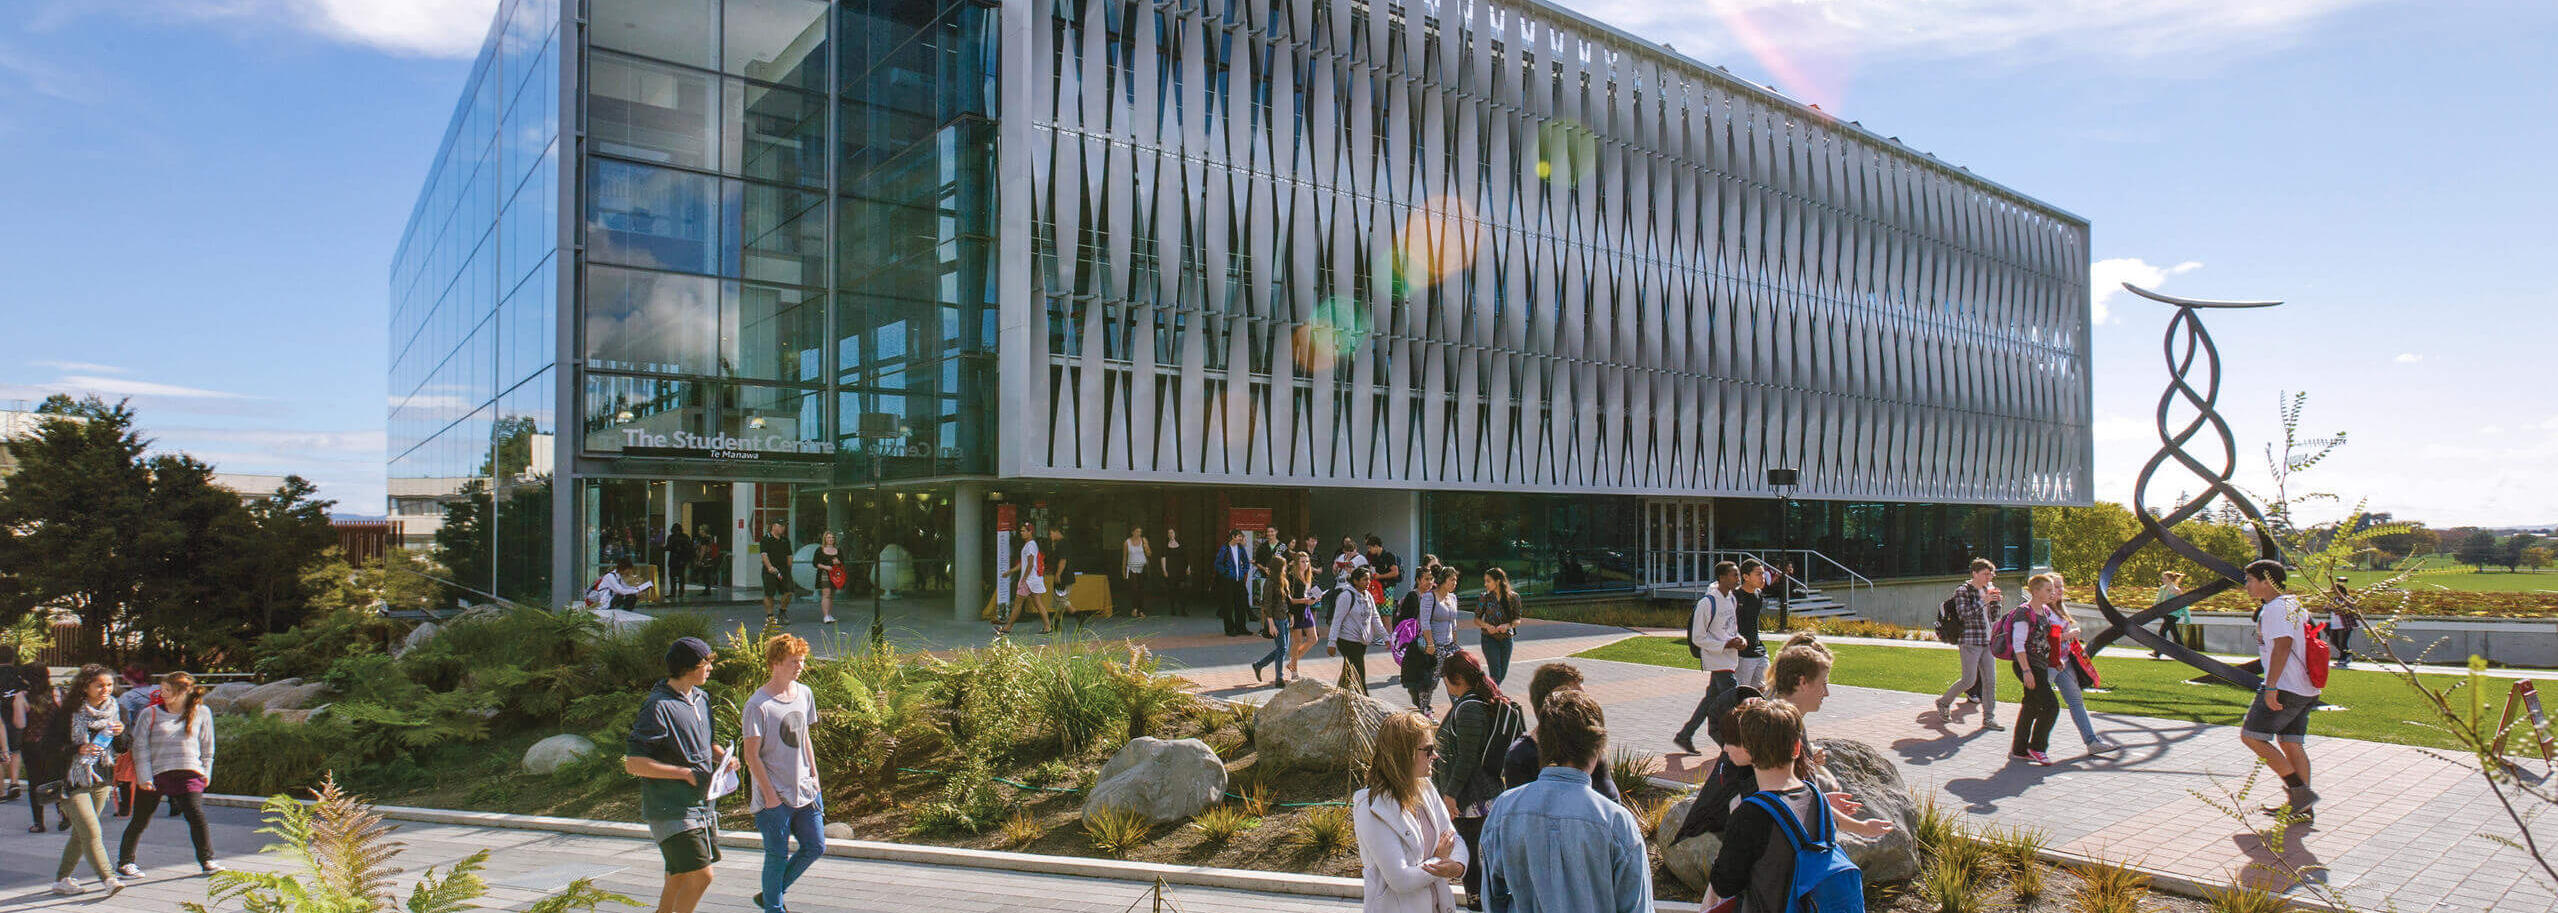 Campus University of Waikato